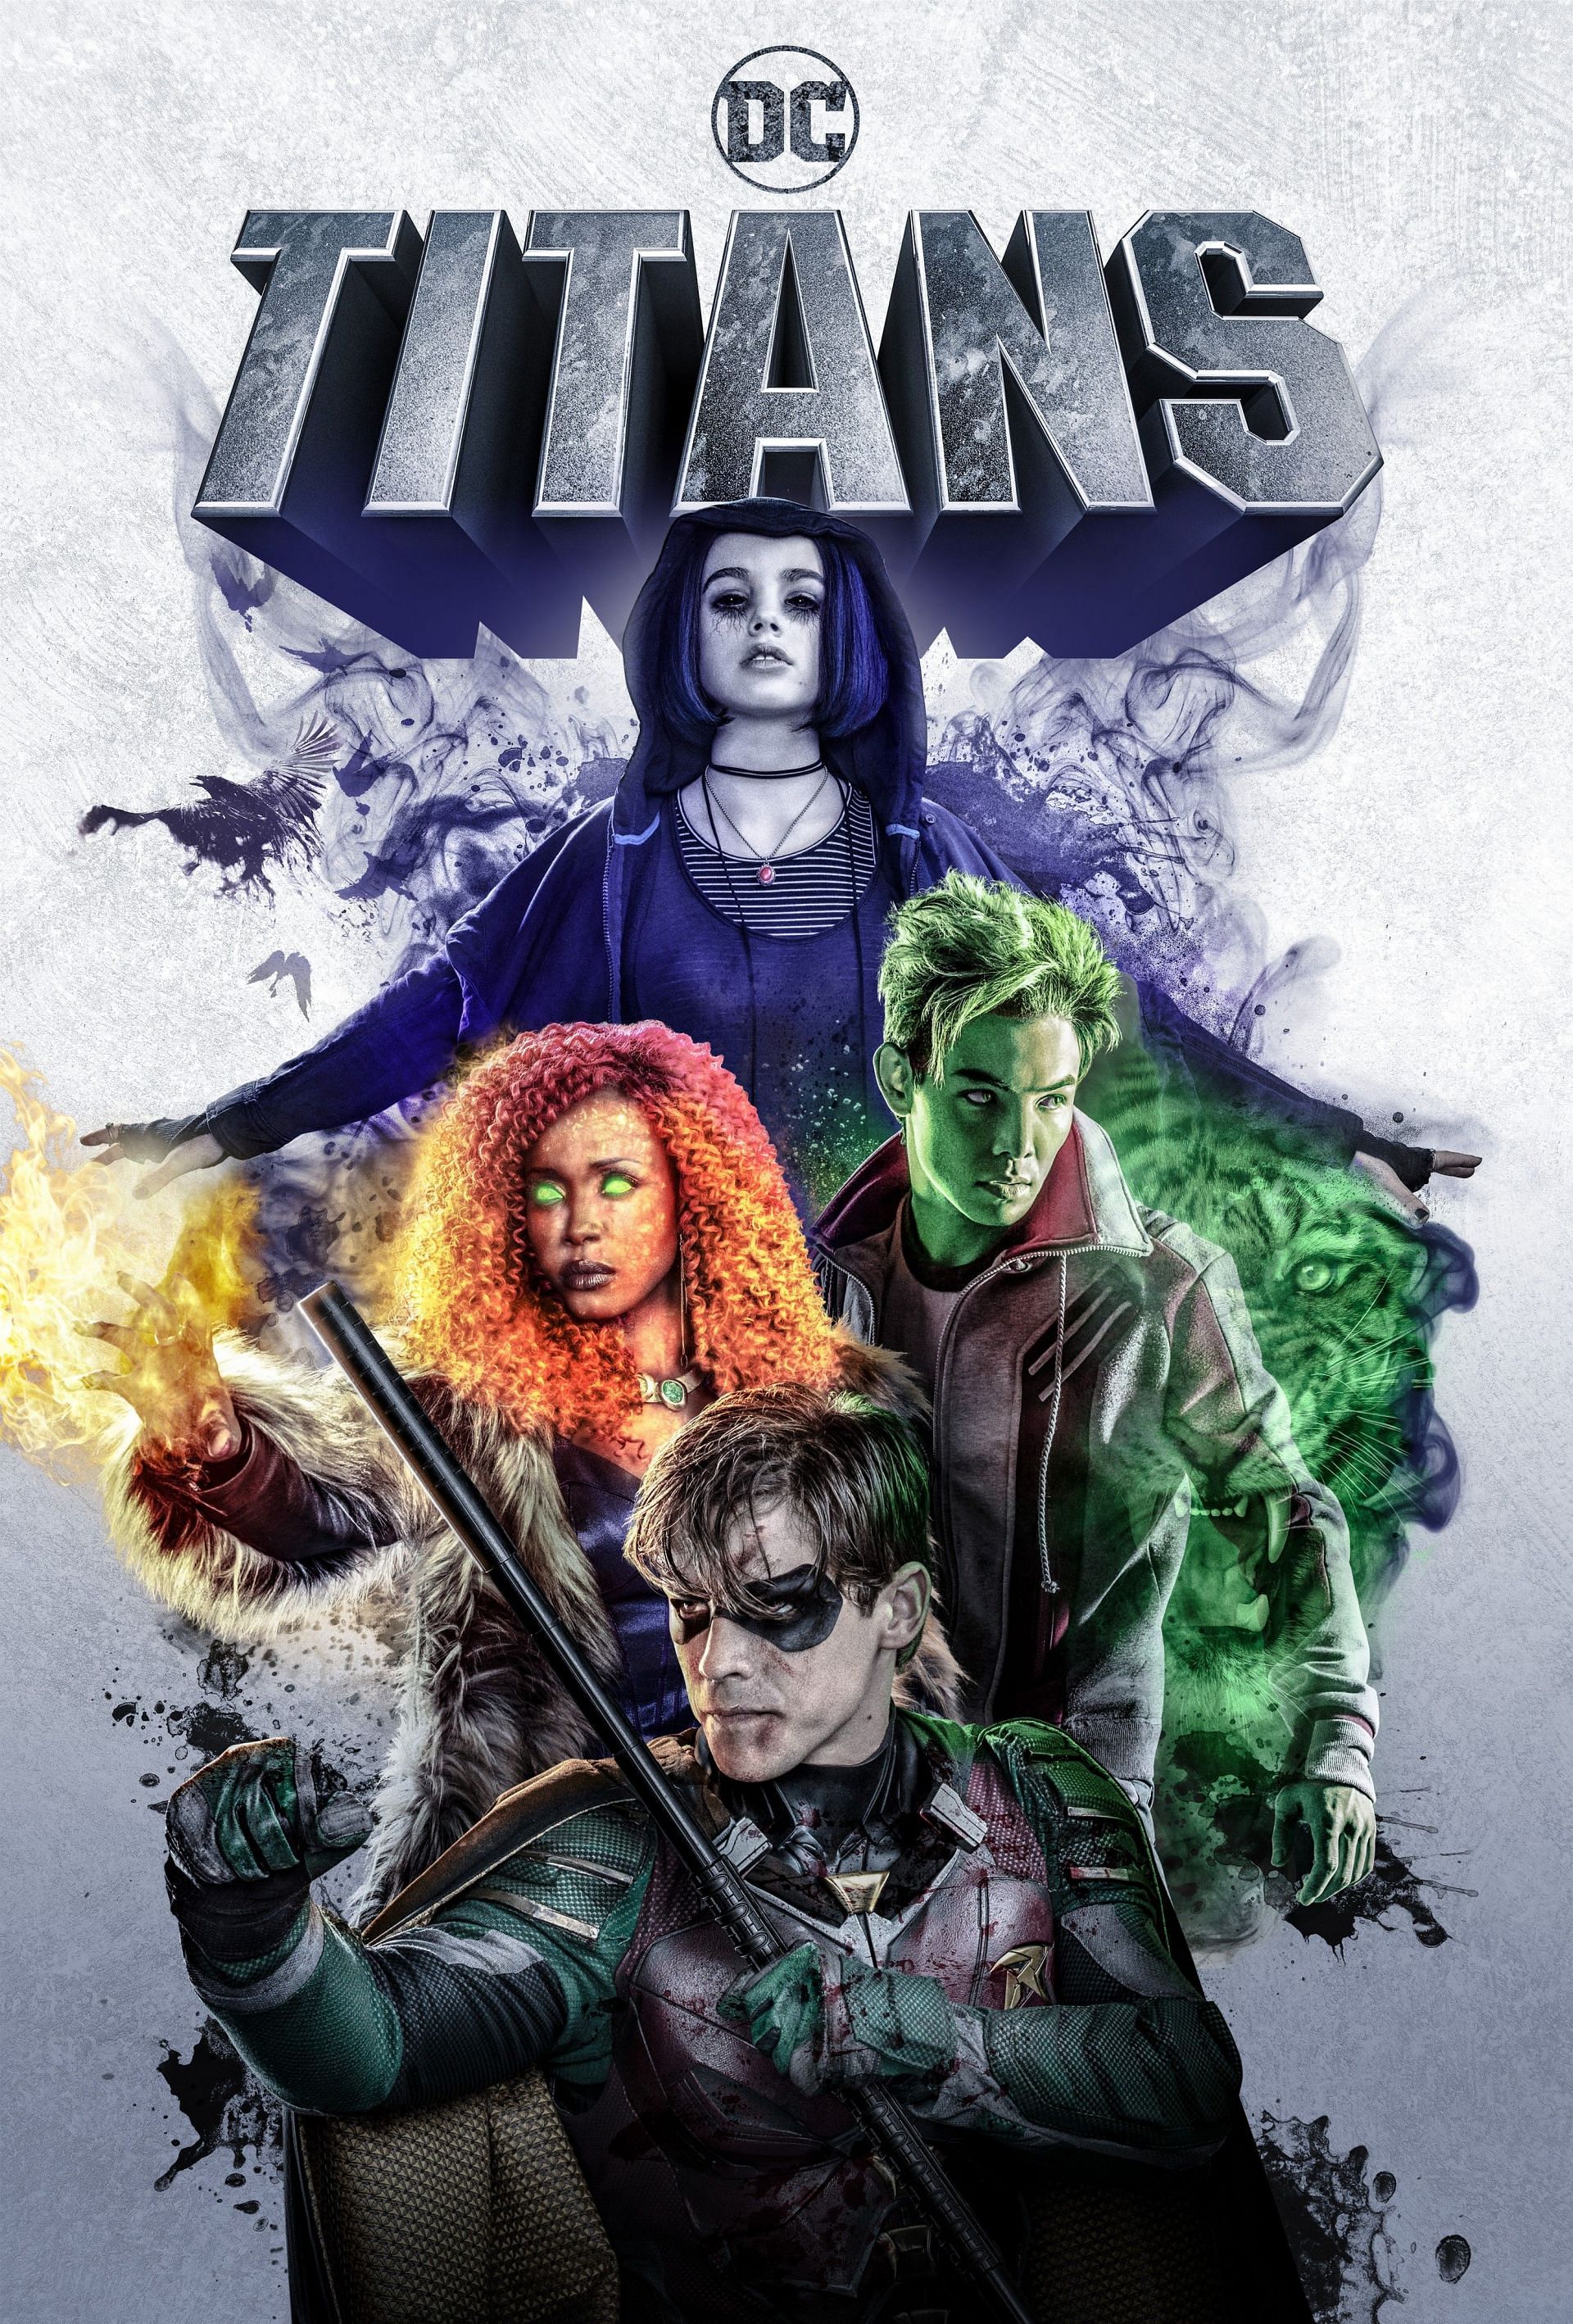 Titans (Image via DC Universe)